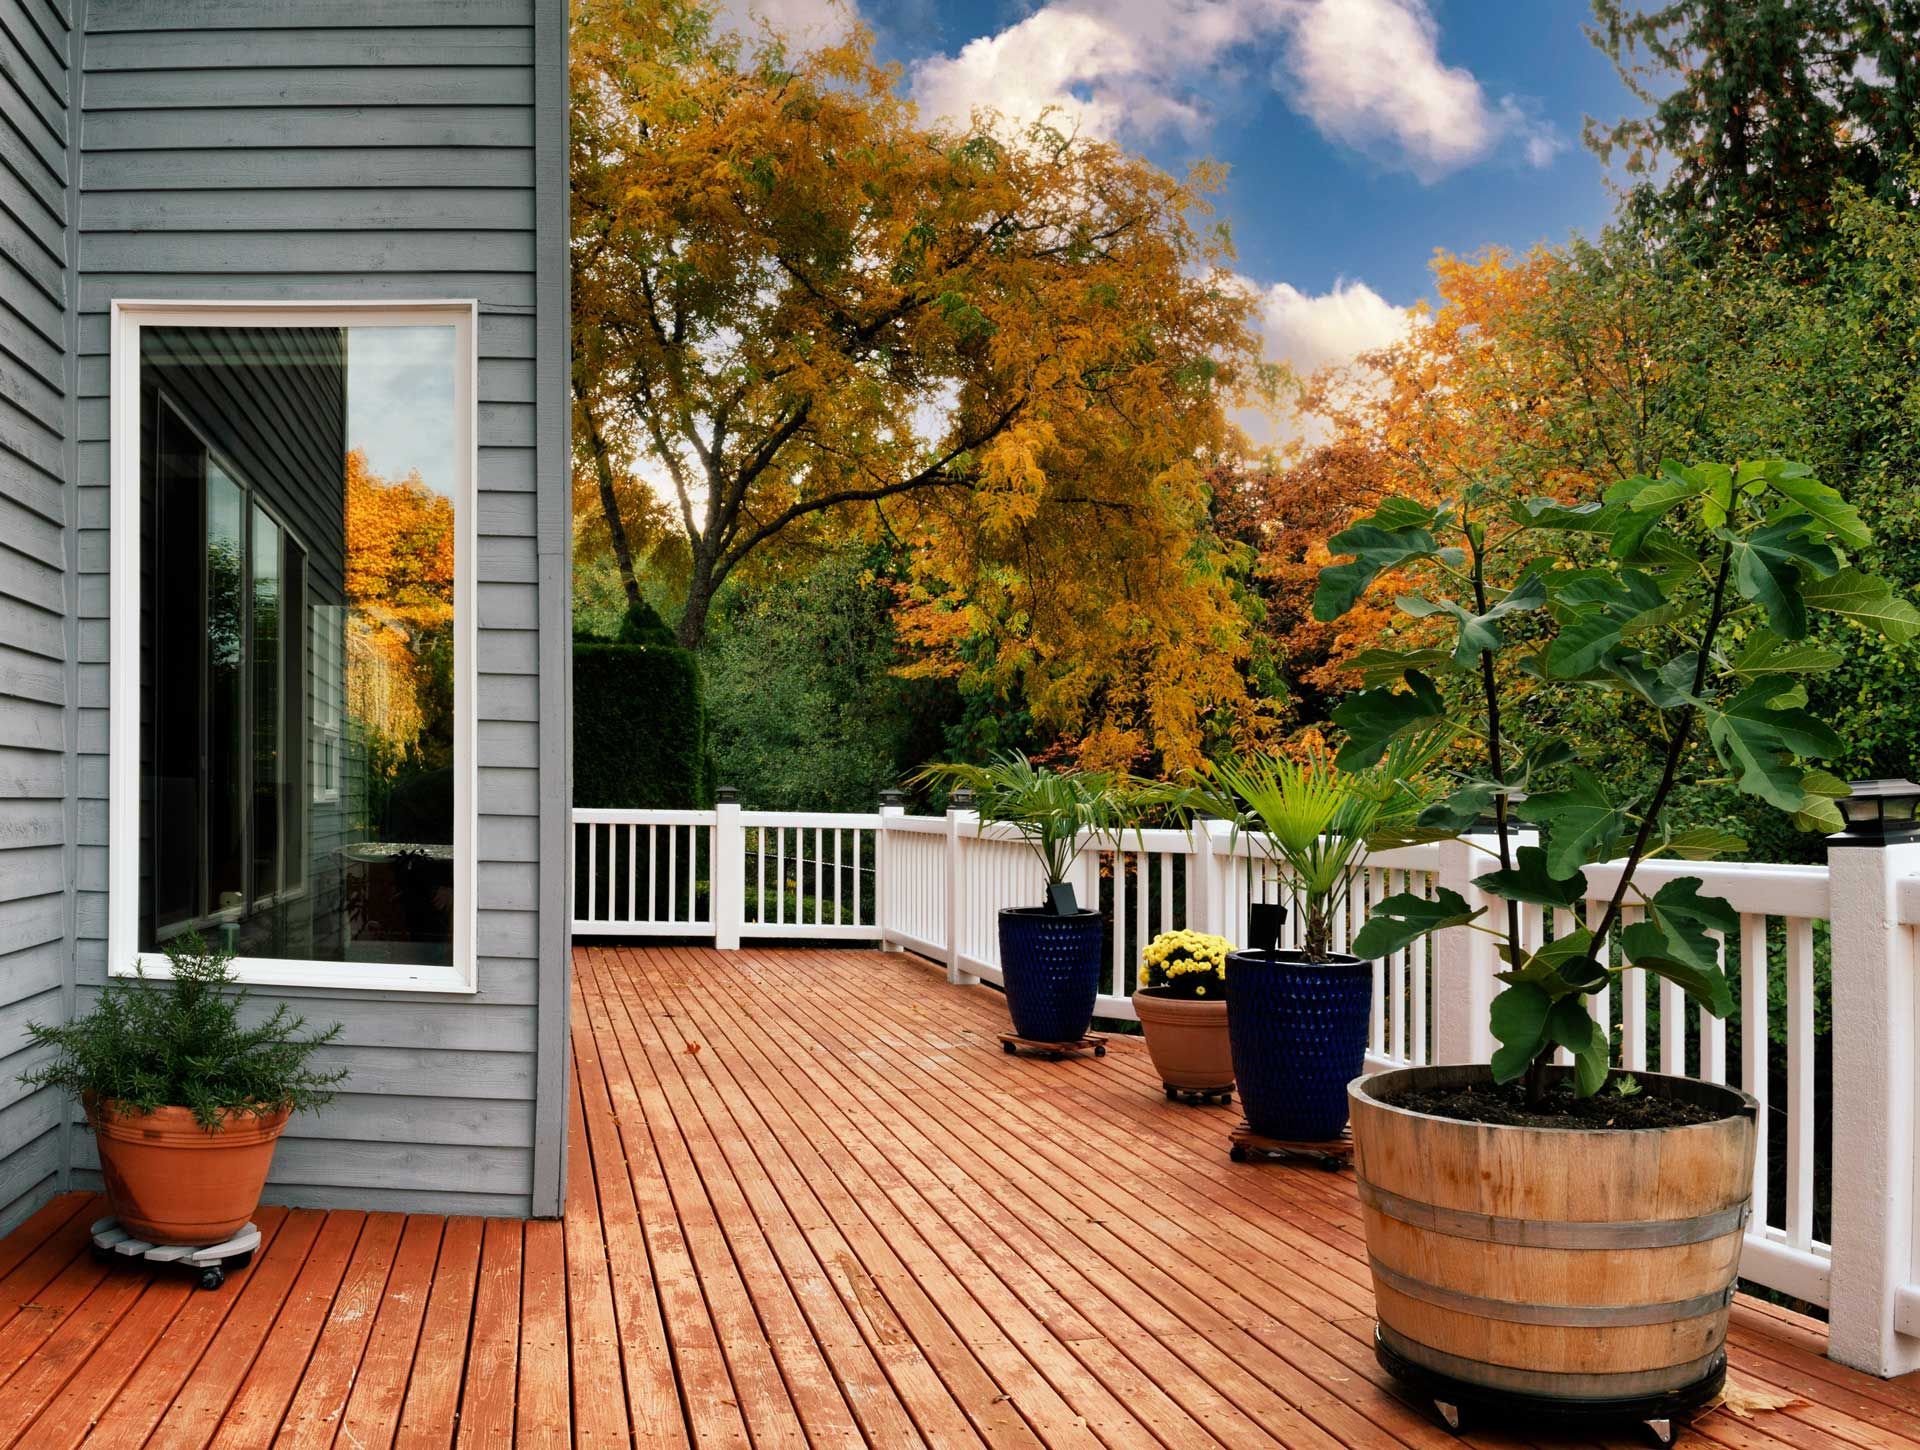 Backyard deck in Autumn